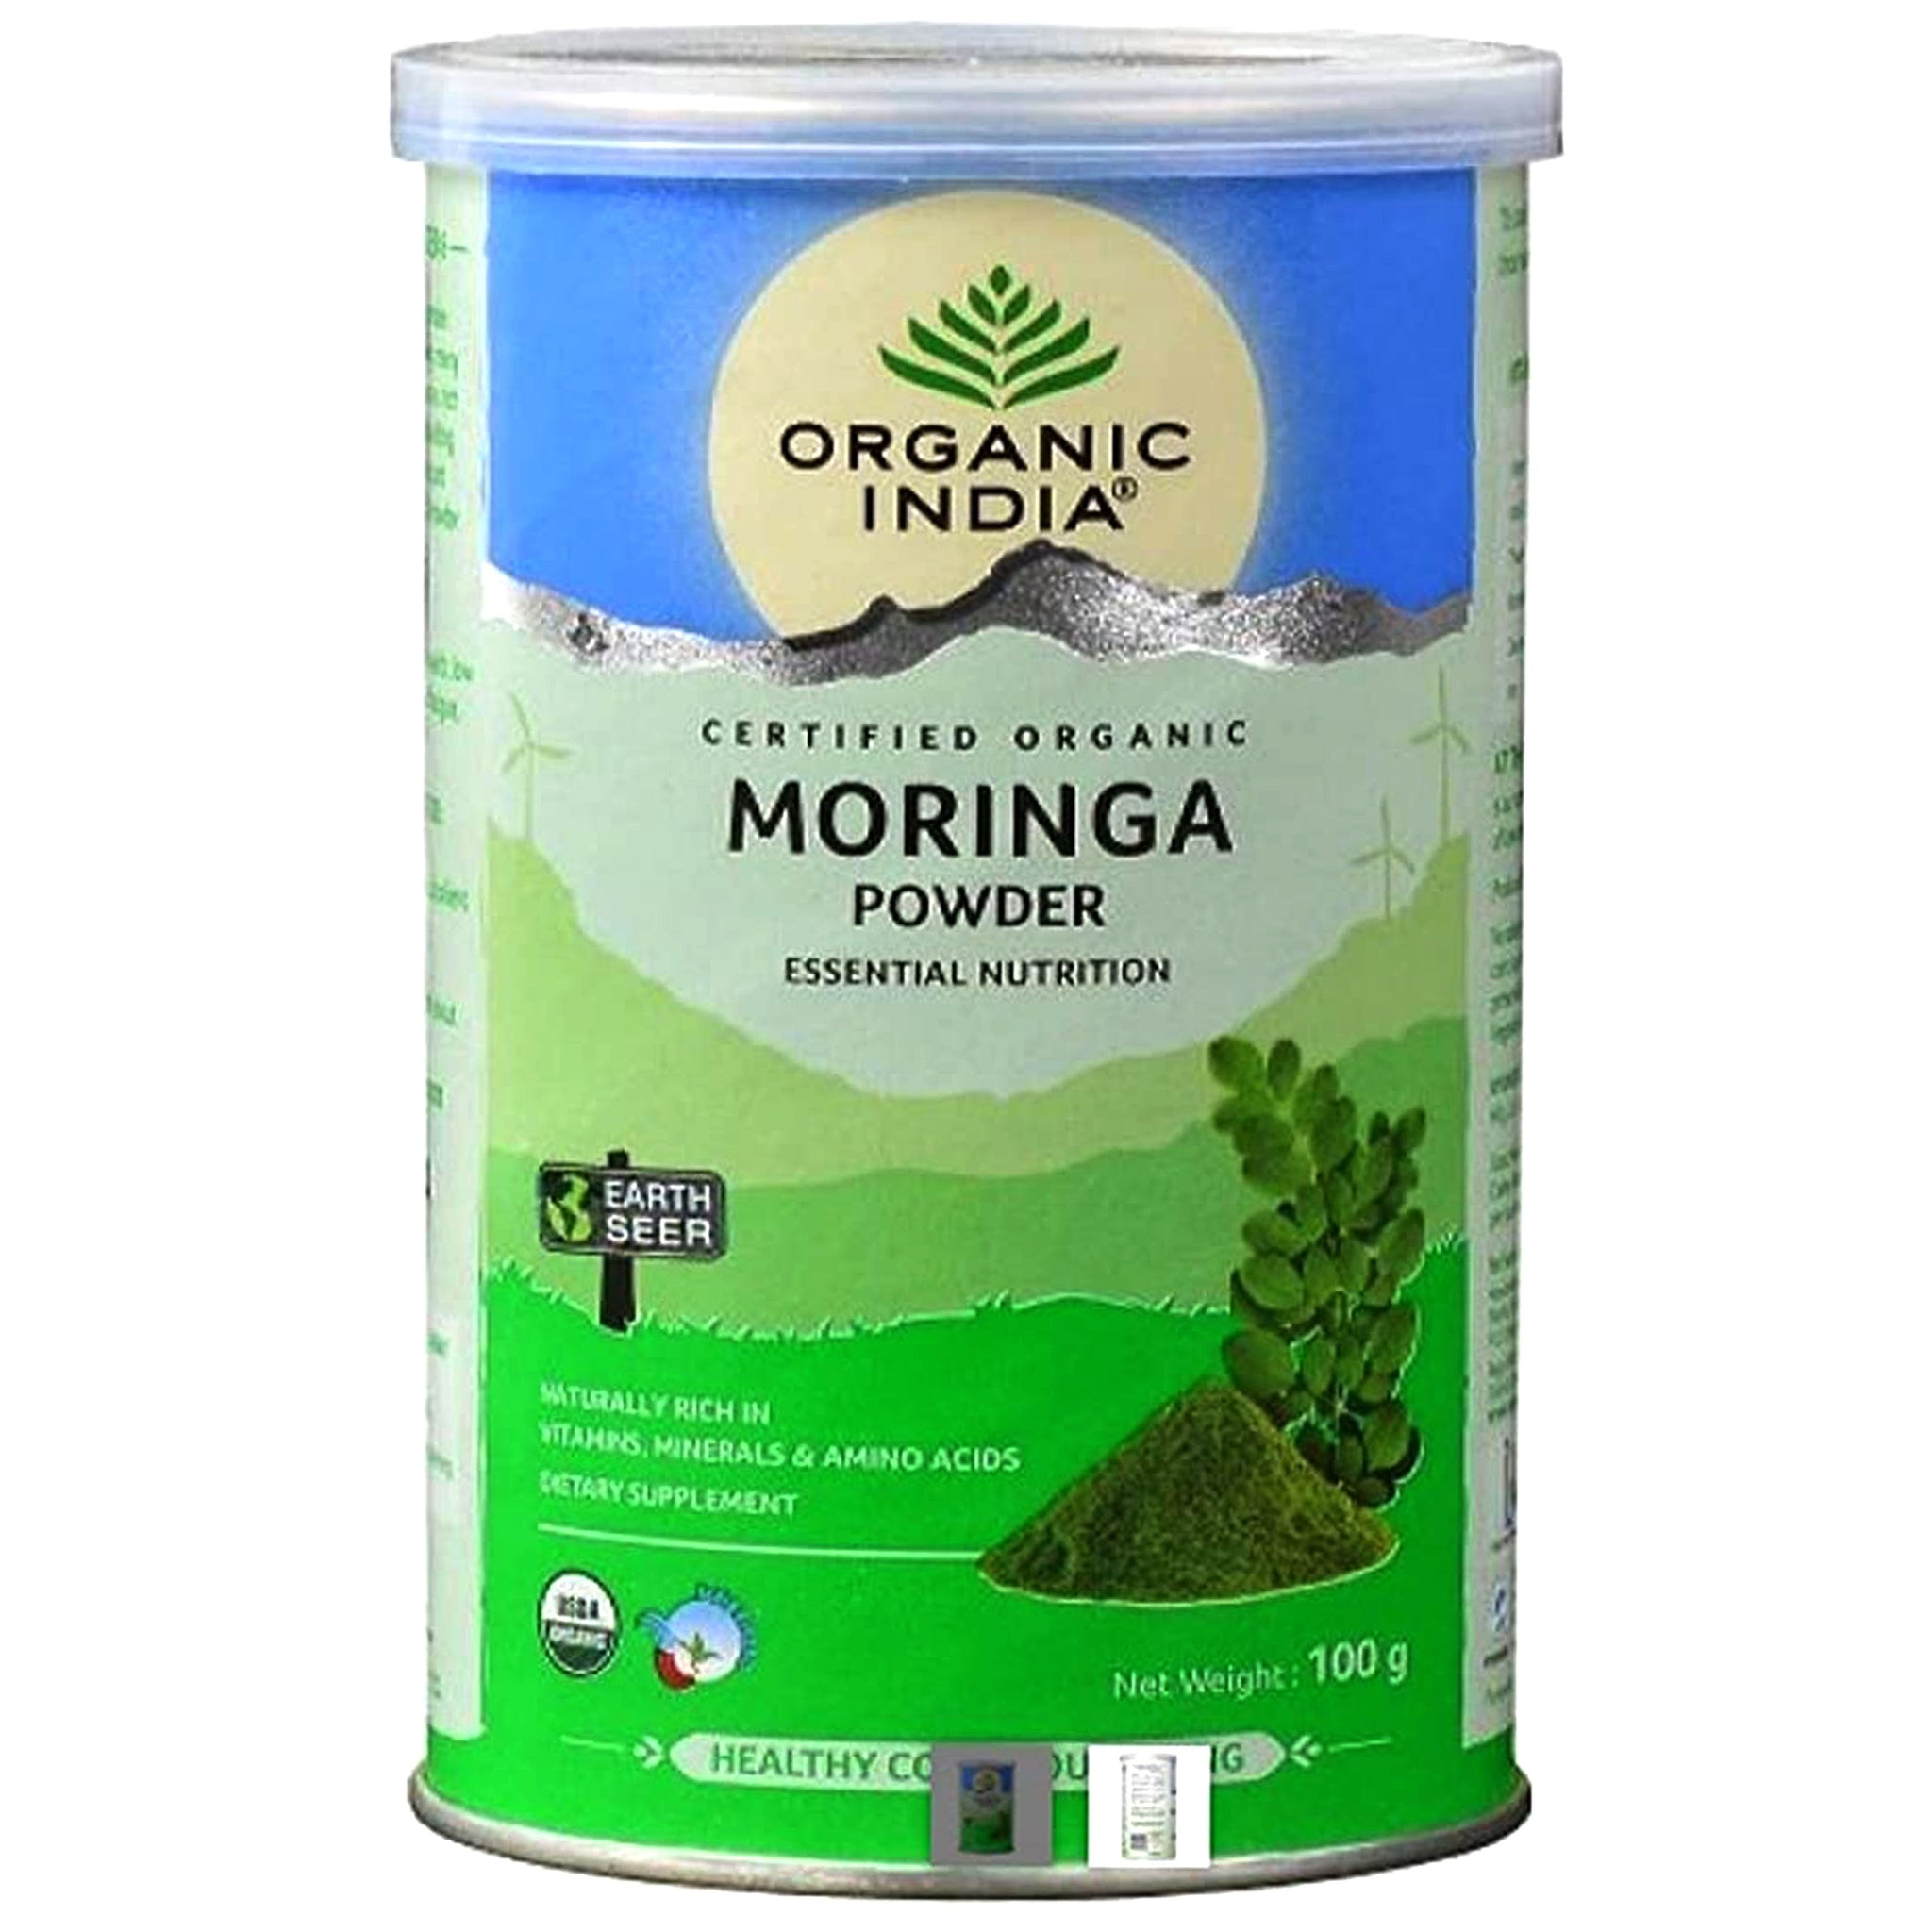 Organic India Moringa Powder 100g Value Pack of 4 